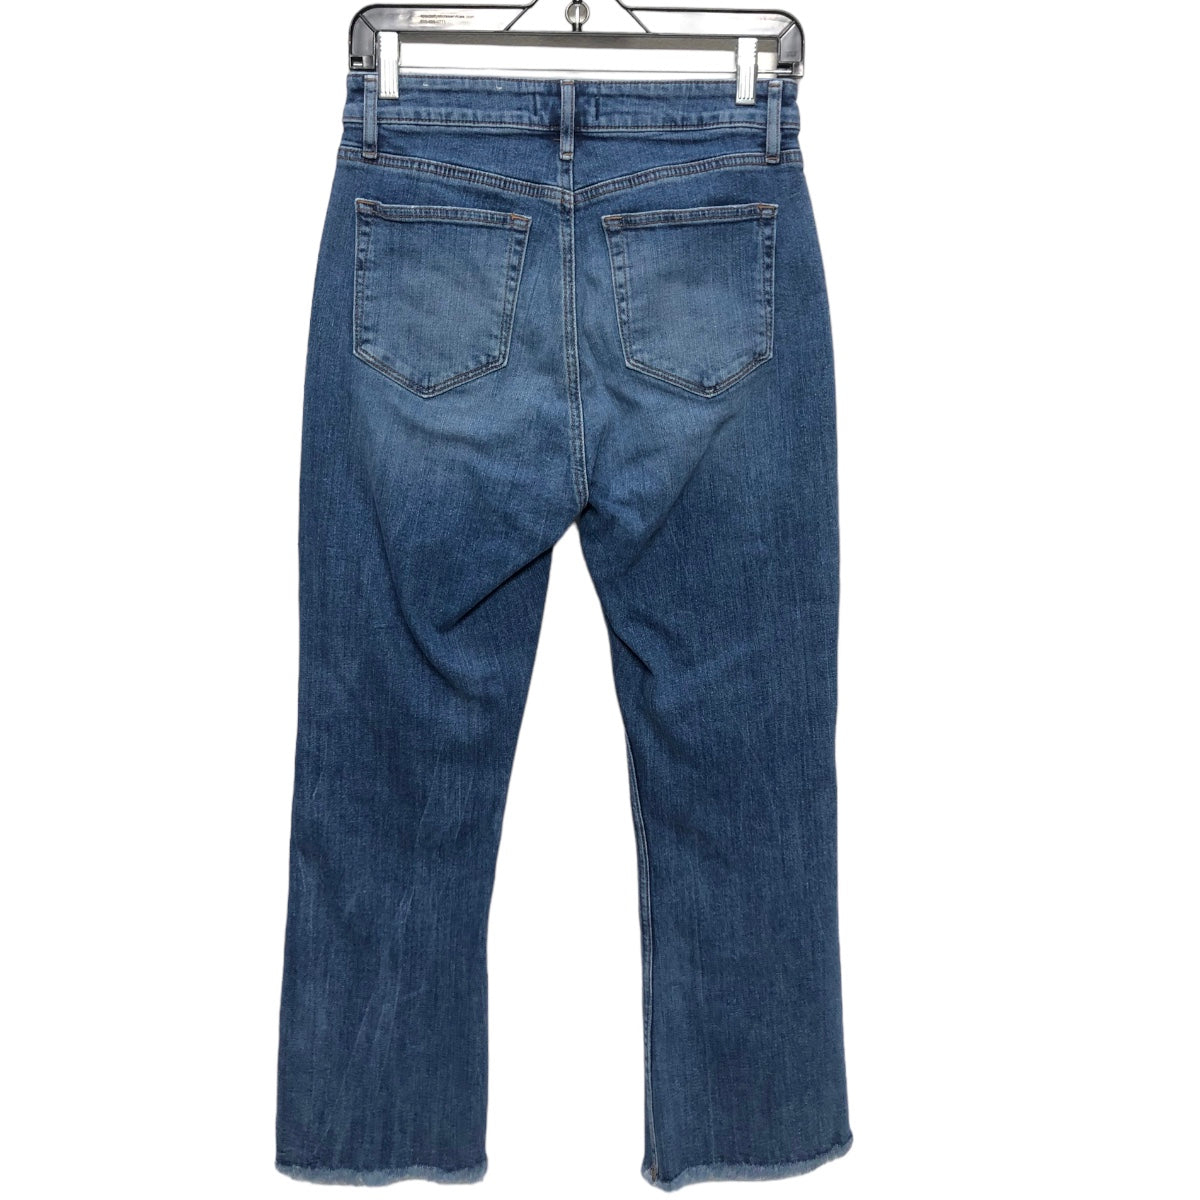 Jeans Boot Cut By Loft  Size: 0